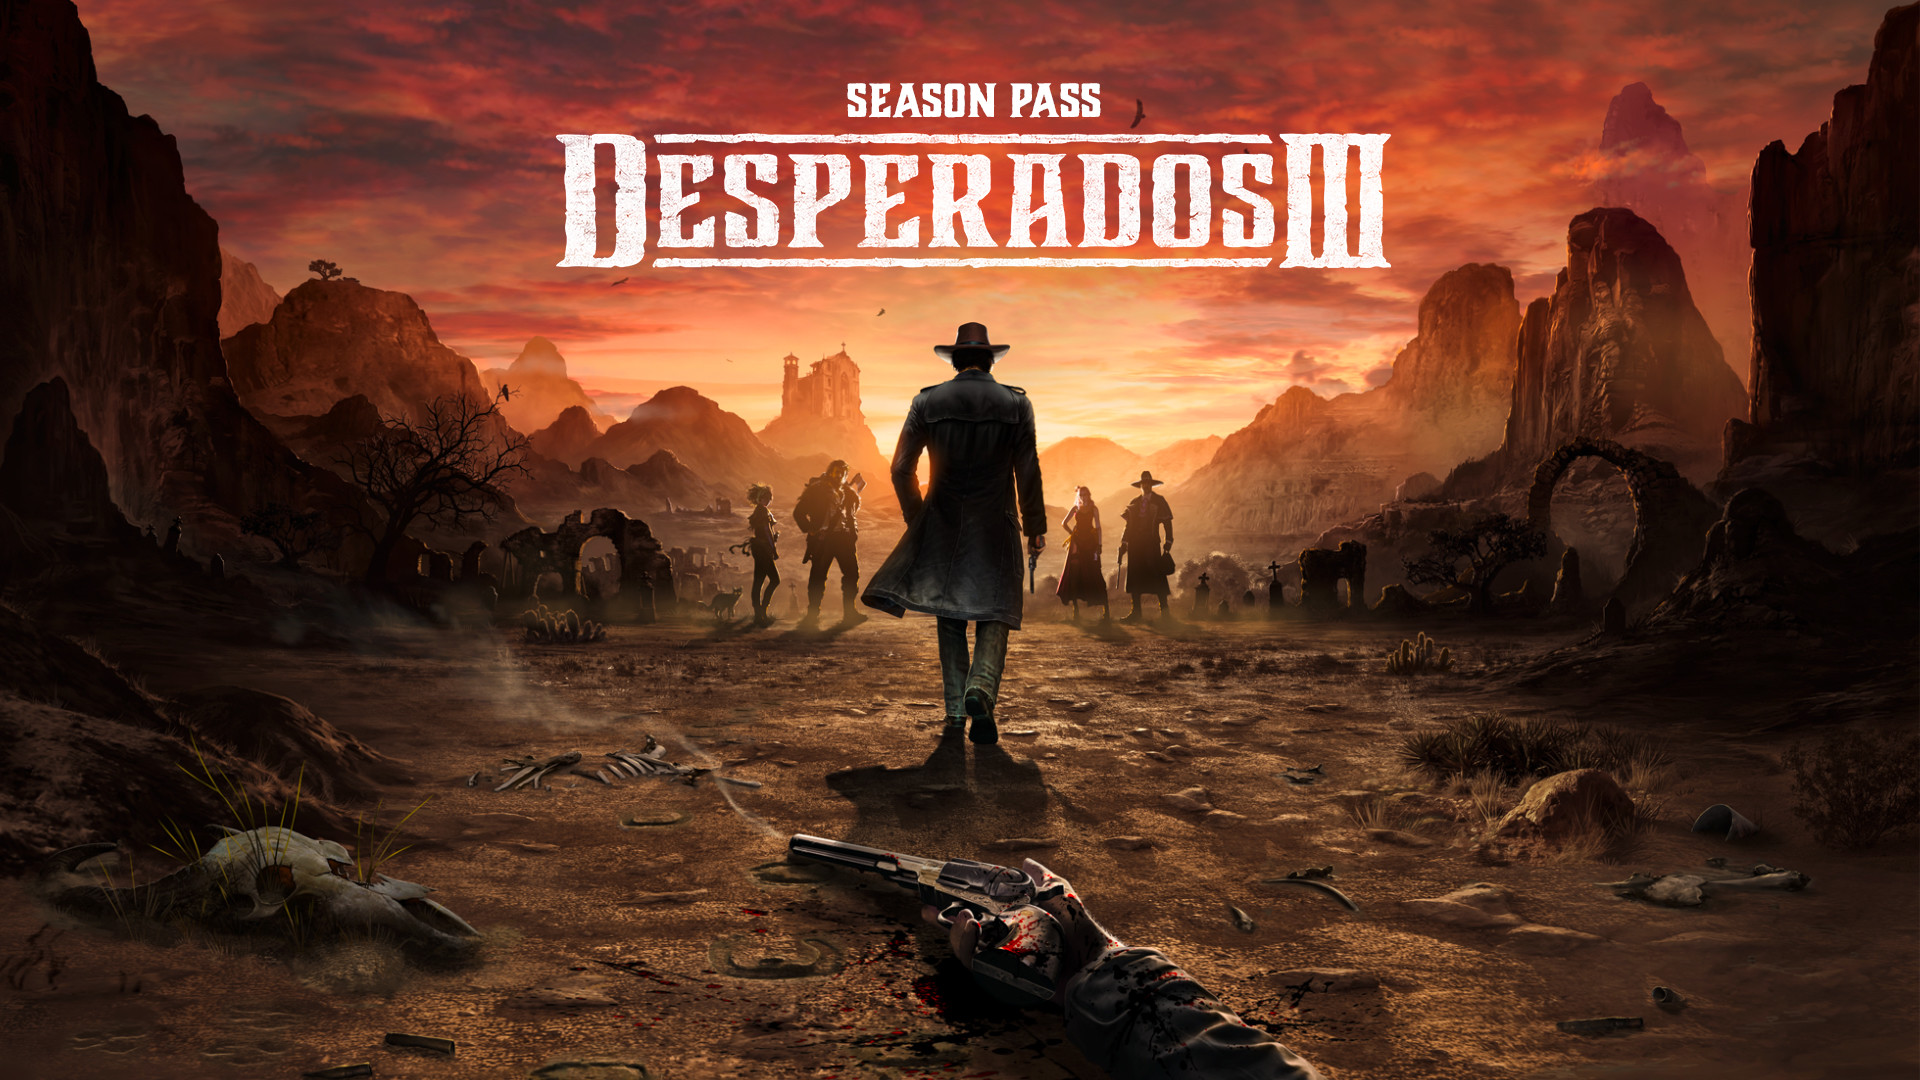 Desperados III Season Pass Featured Screenshot #1